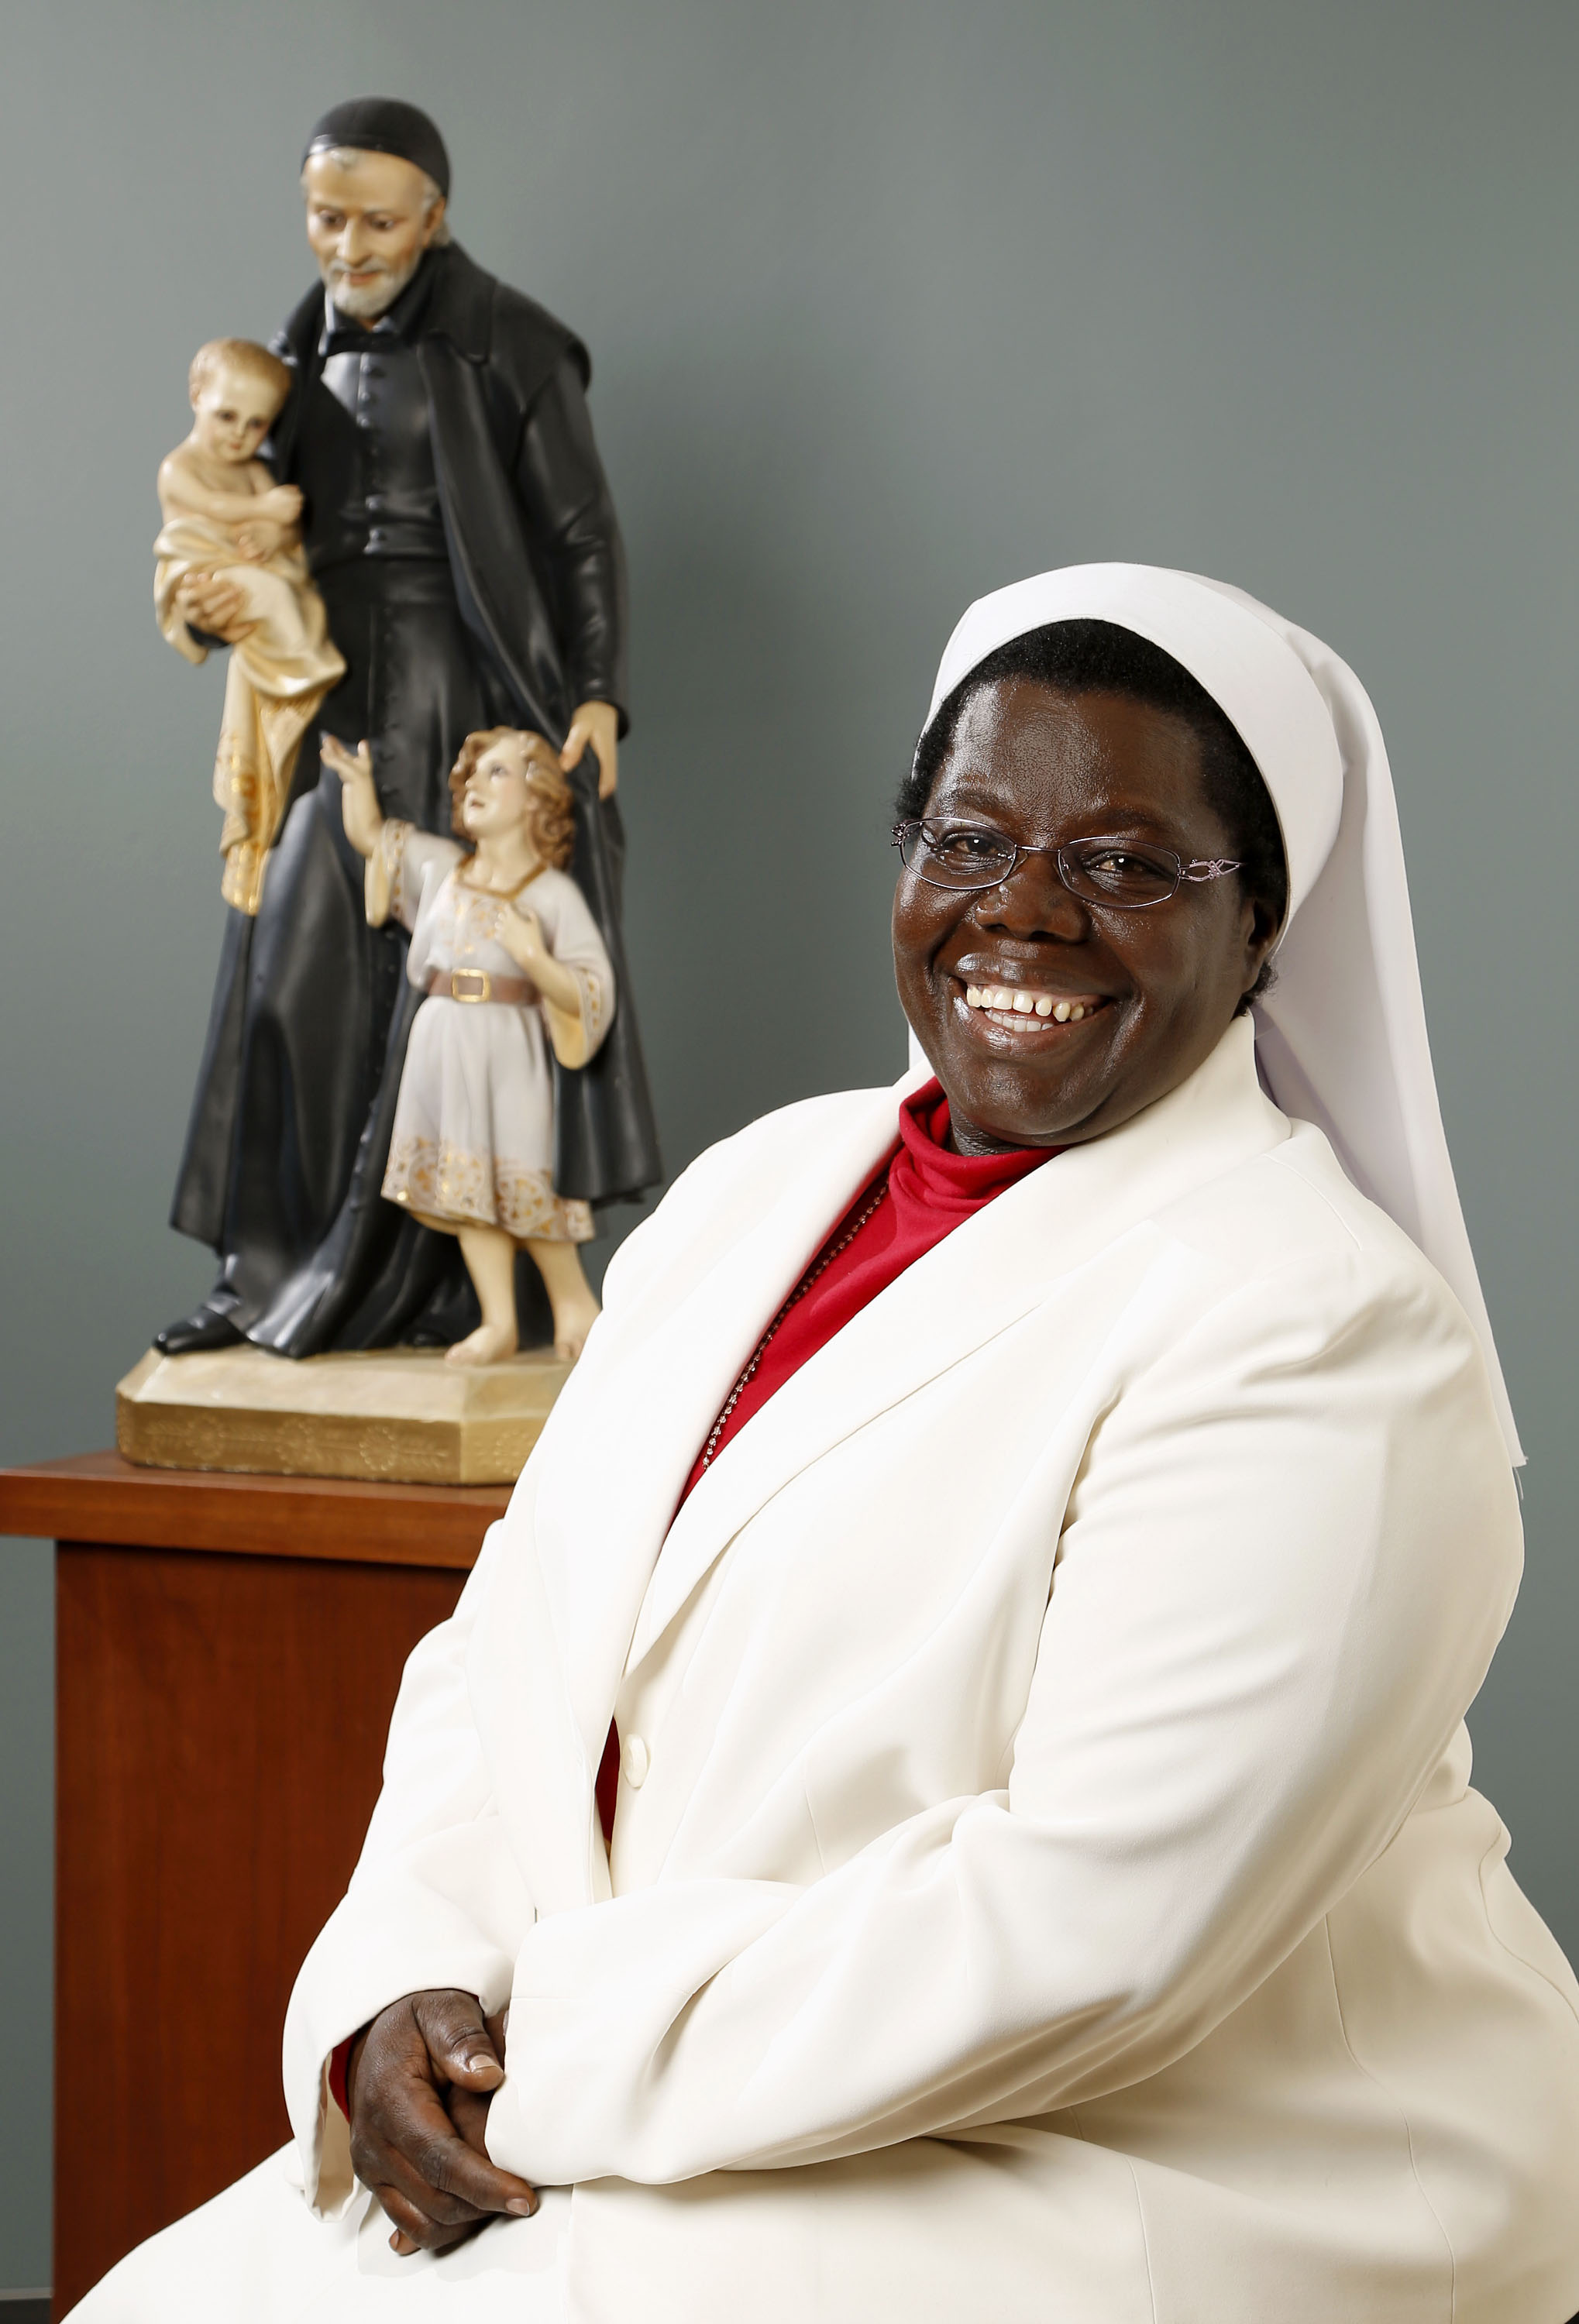 Sister Rosemary Nyirumbe